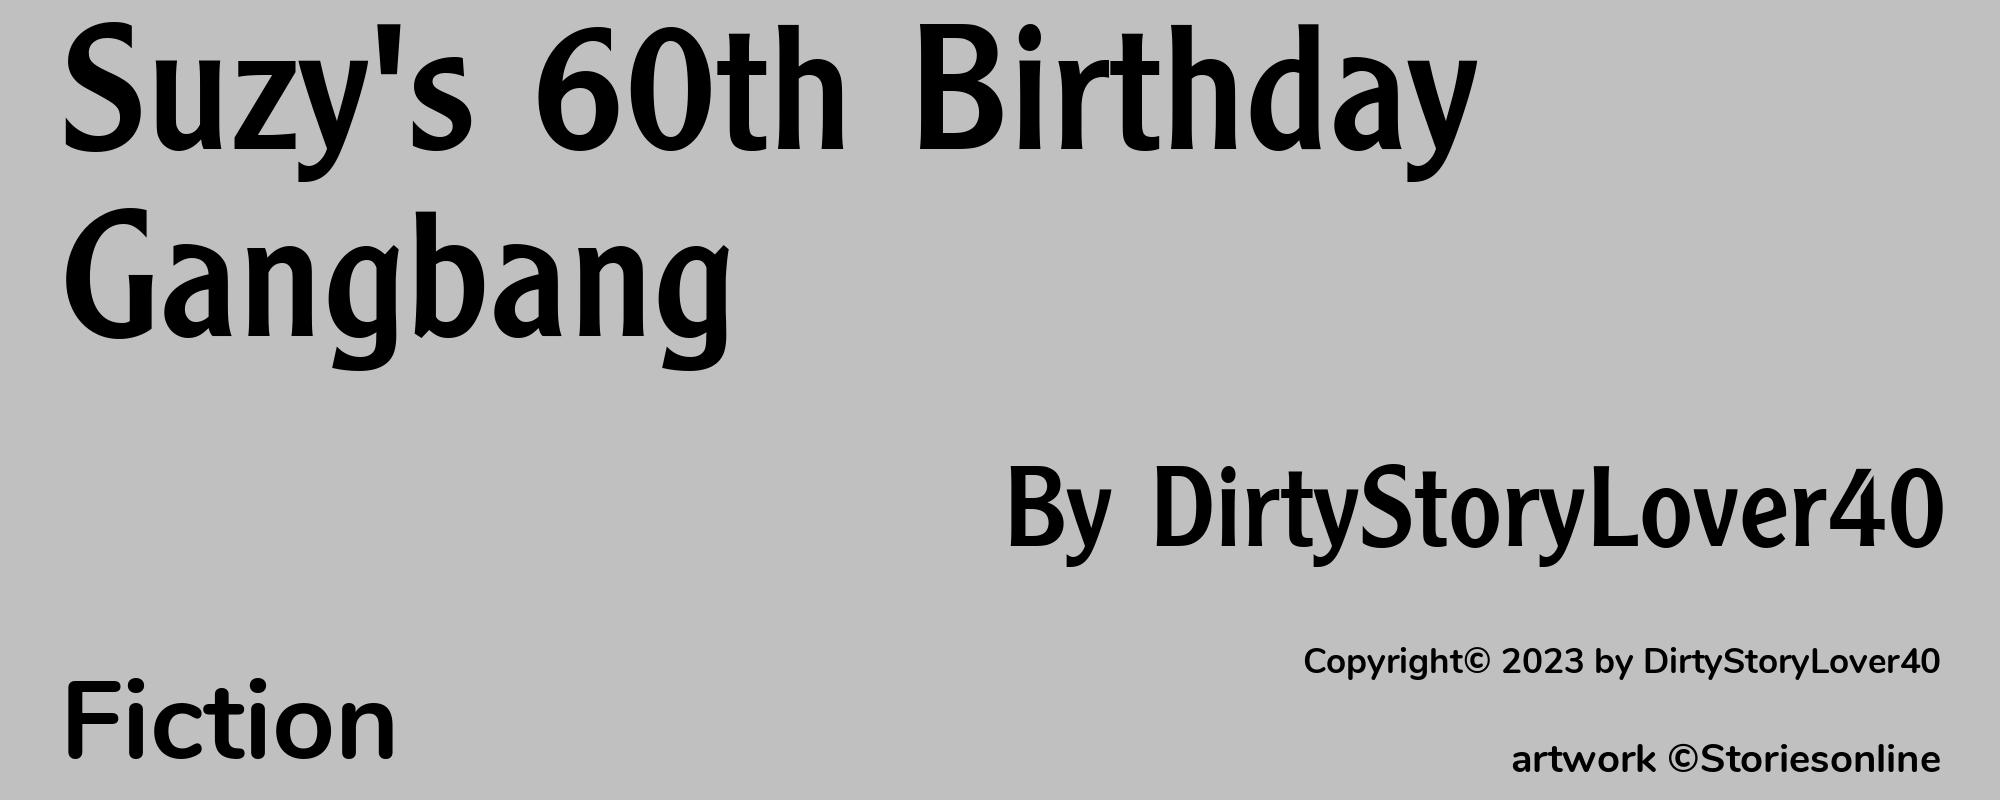 Suzy's 60th Birthday Gangbang - Cover